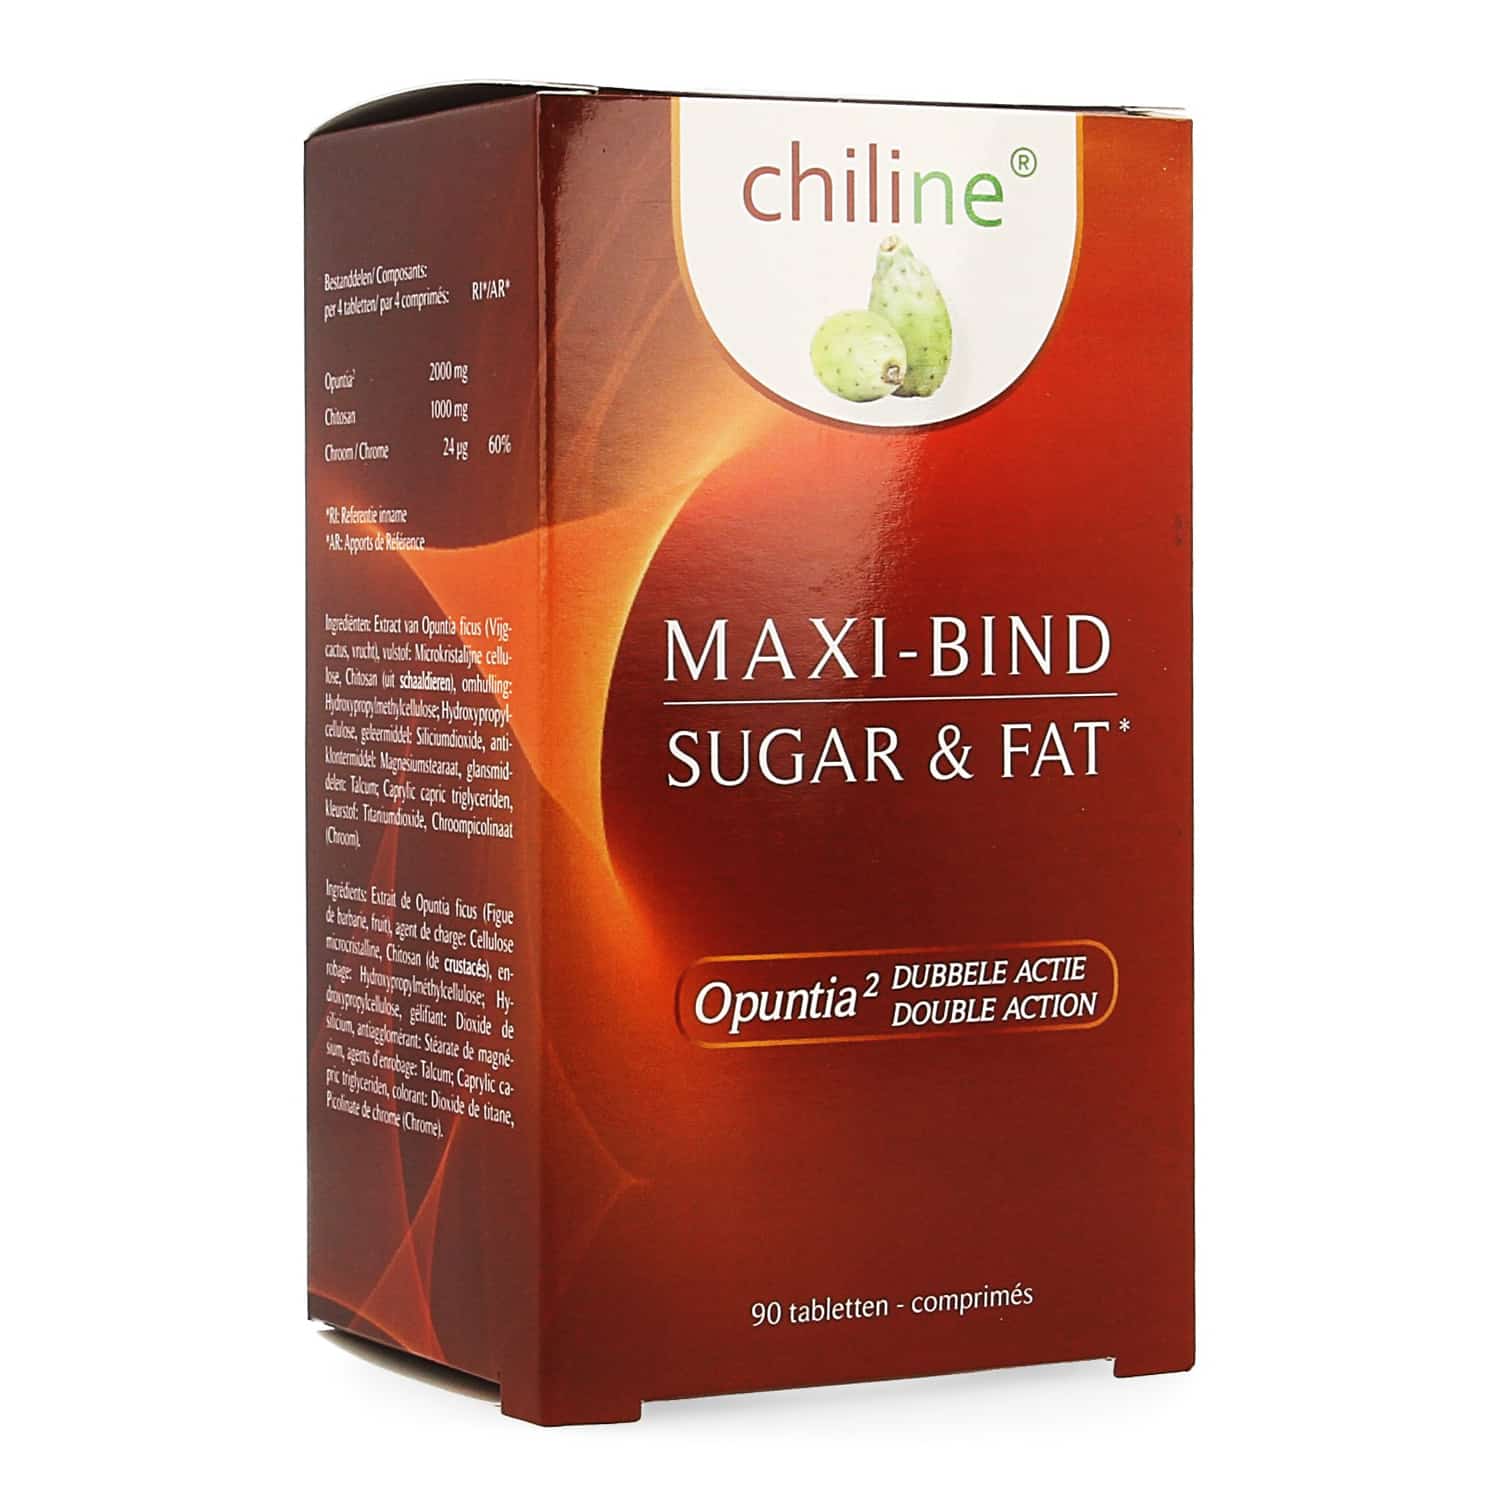 Chiline Maxi-Bind Sugar & Fat